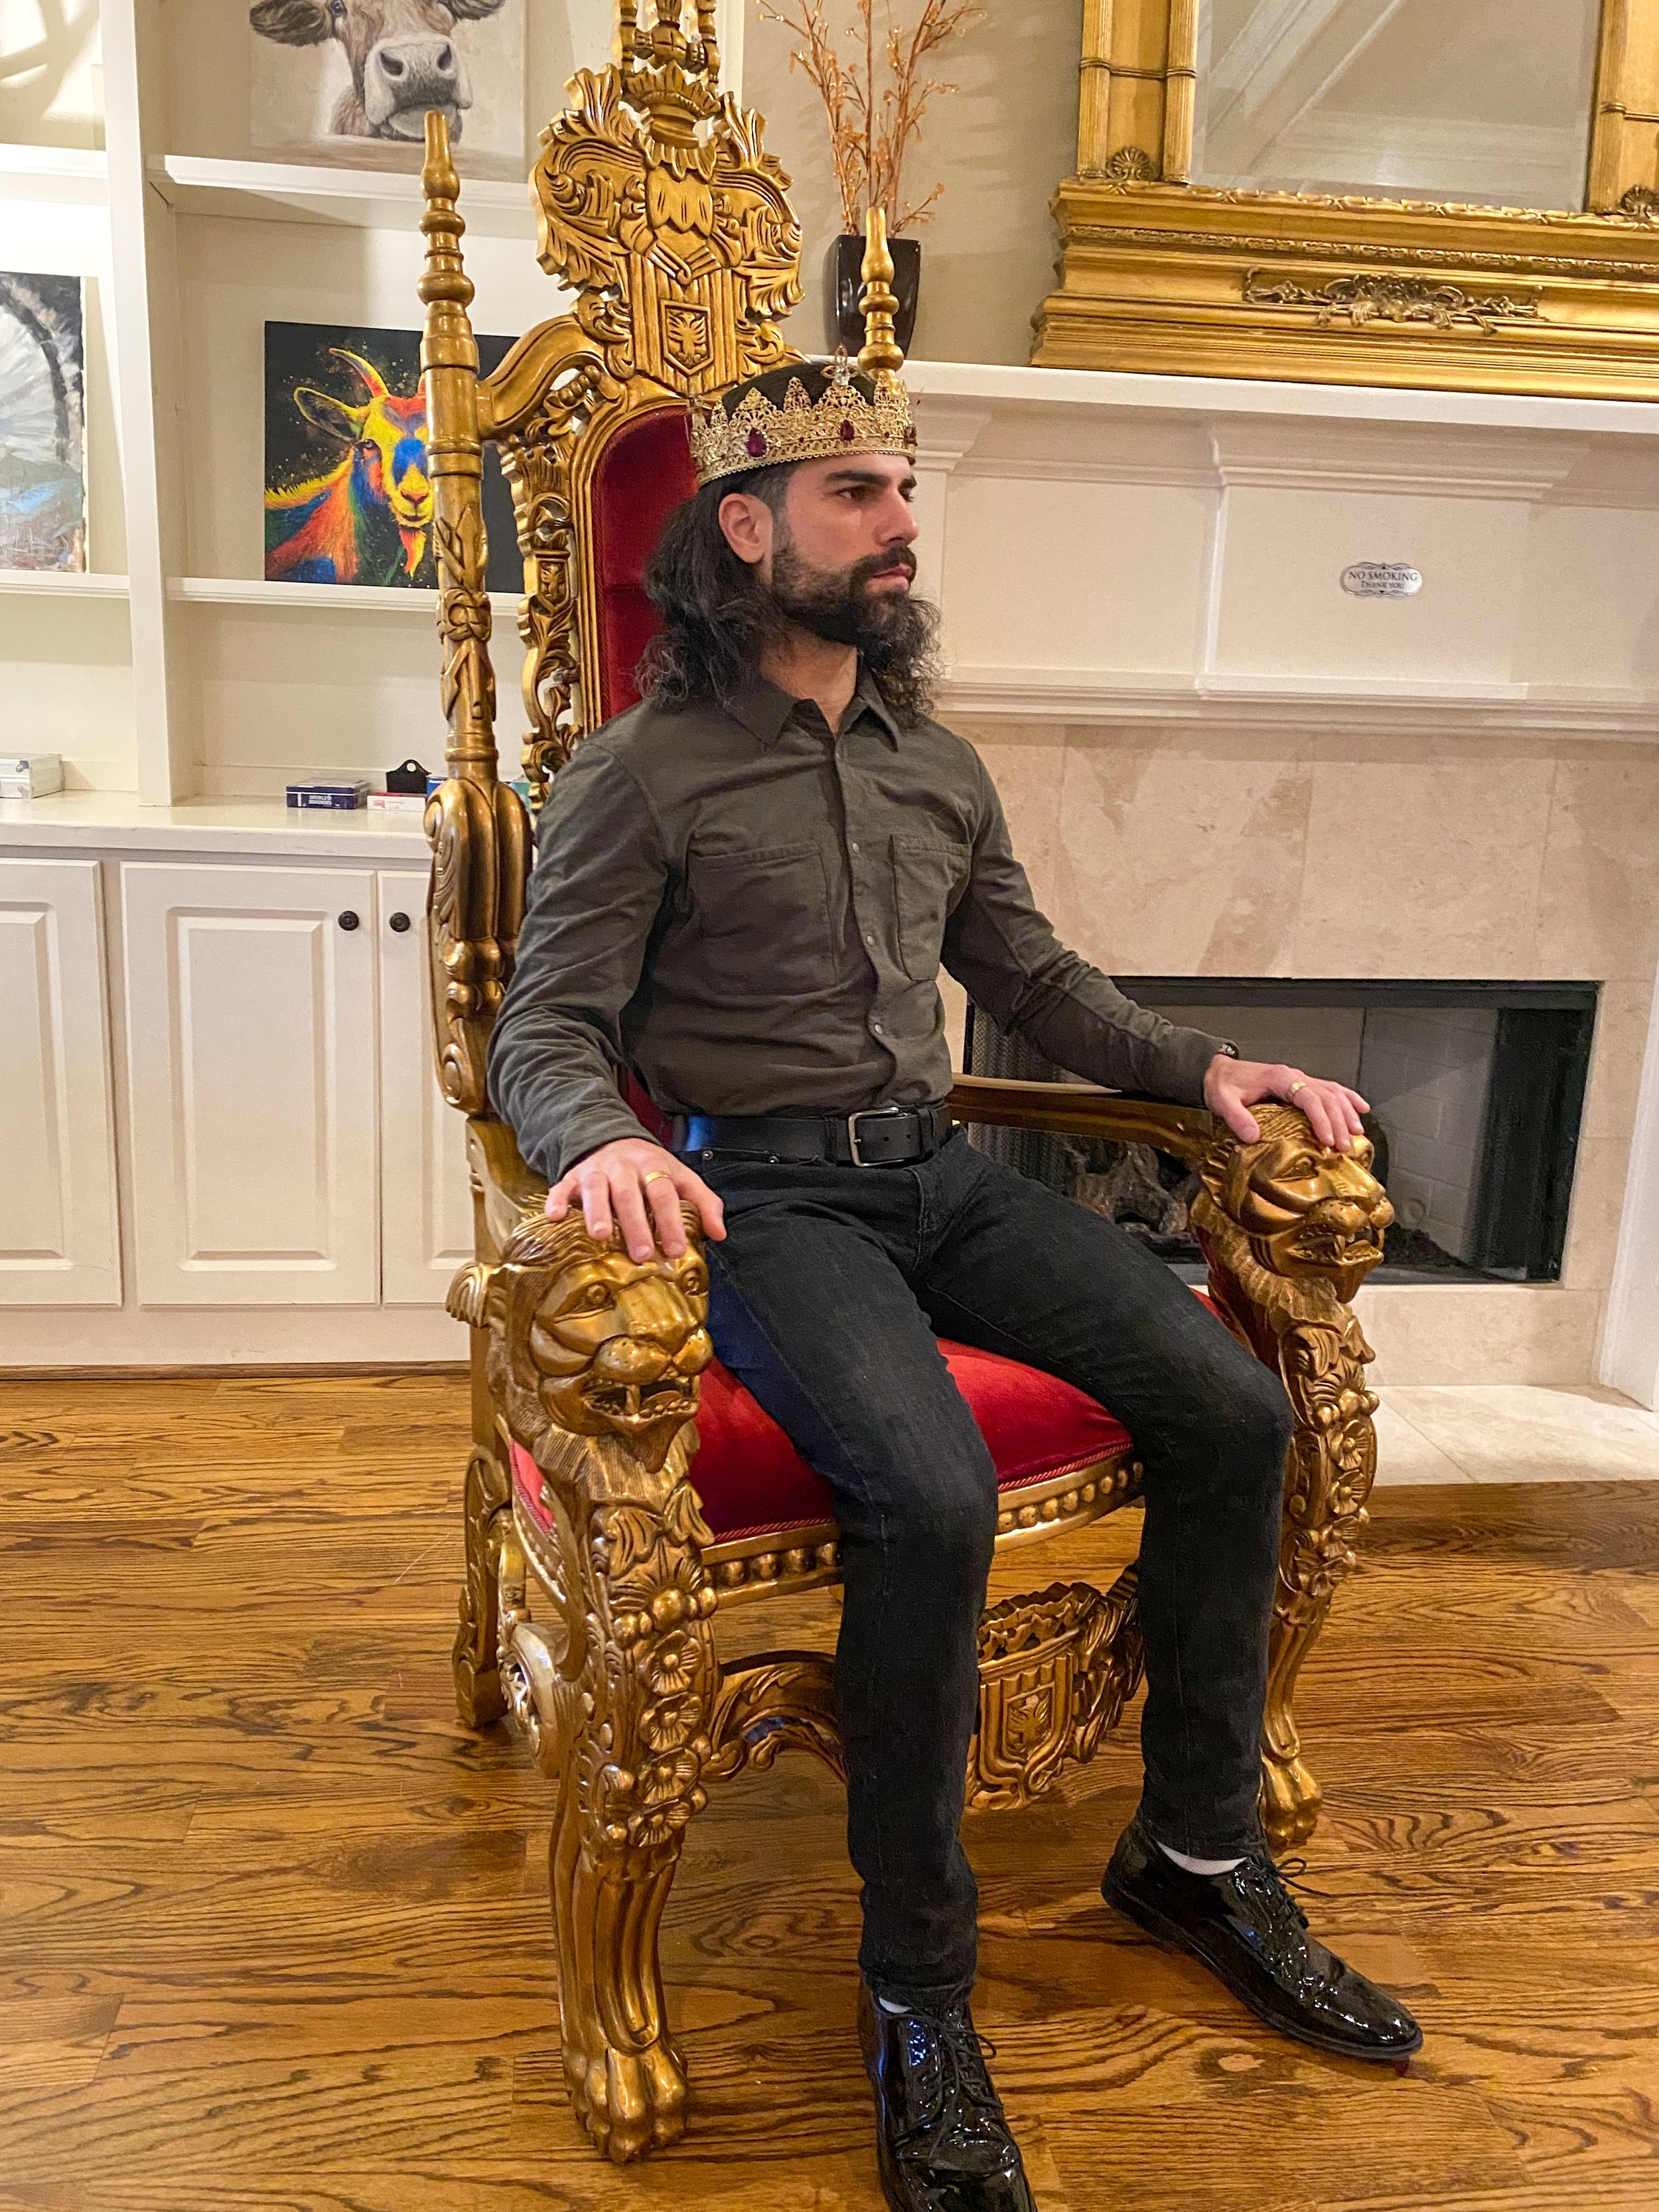 Apparently Gabo was coronated king of the Atlanta Airbnb. ¡Viva el rey Gabo!